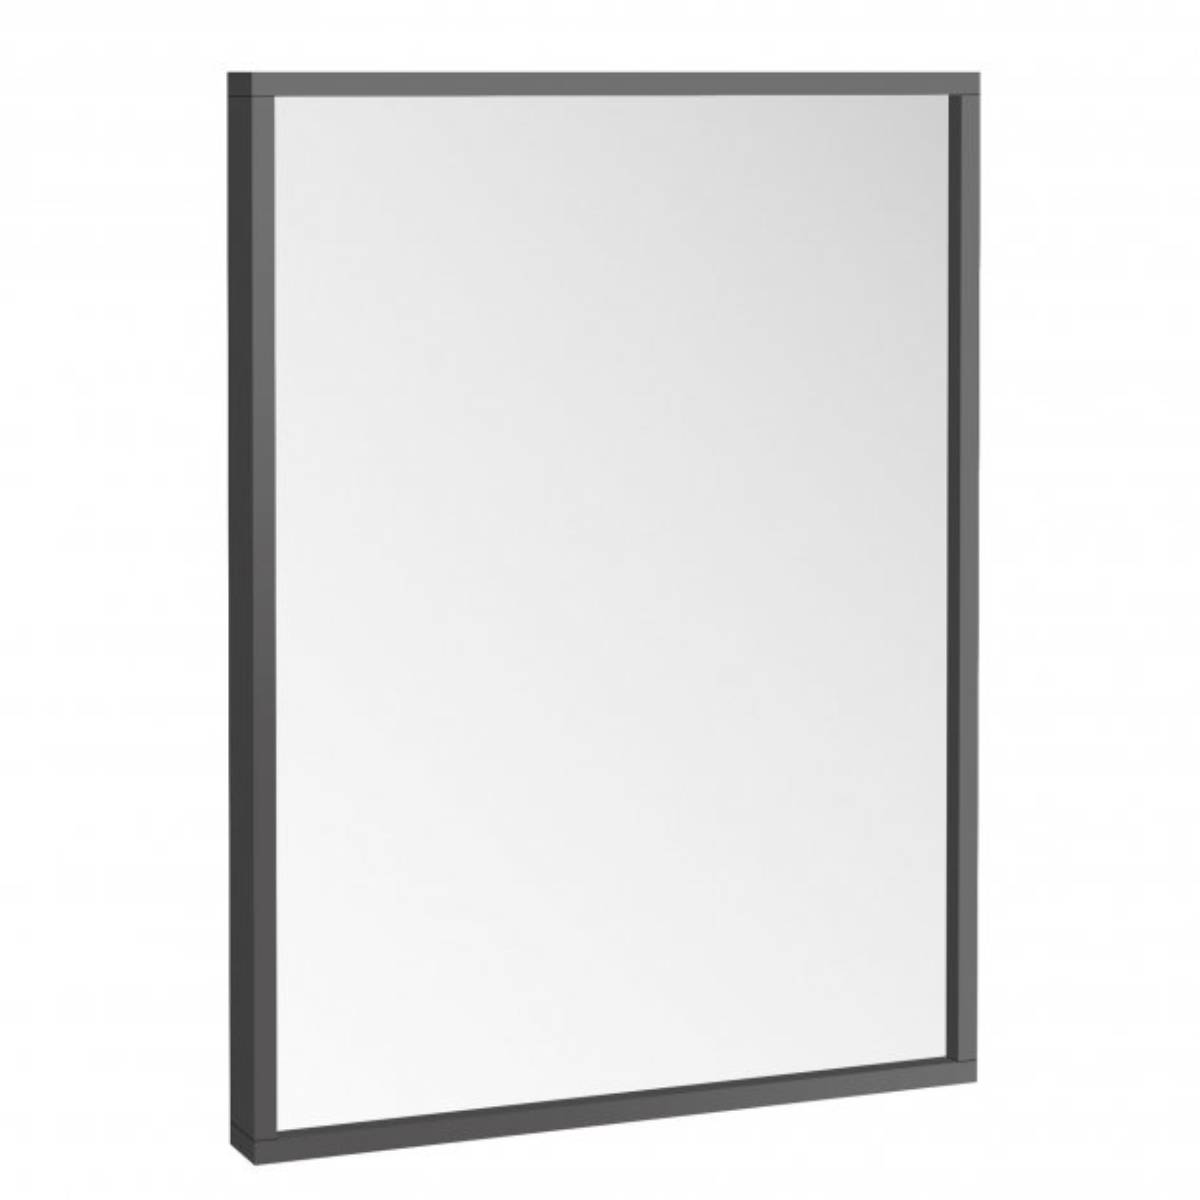 Ambience 600 x 800mm Simplistic Mirror - Matt Grey (13154)